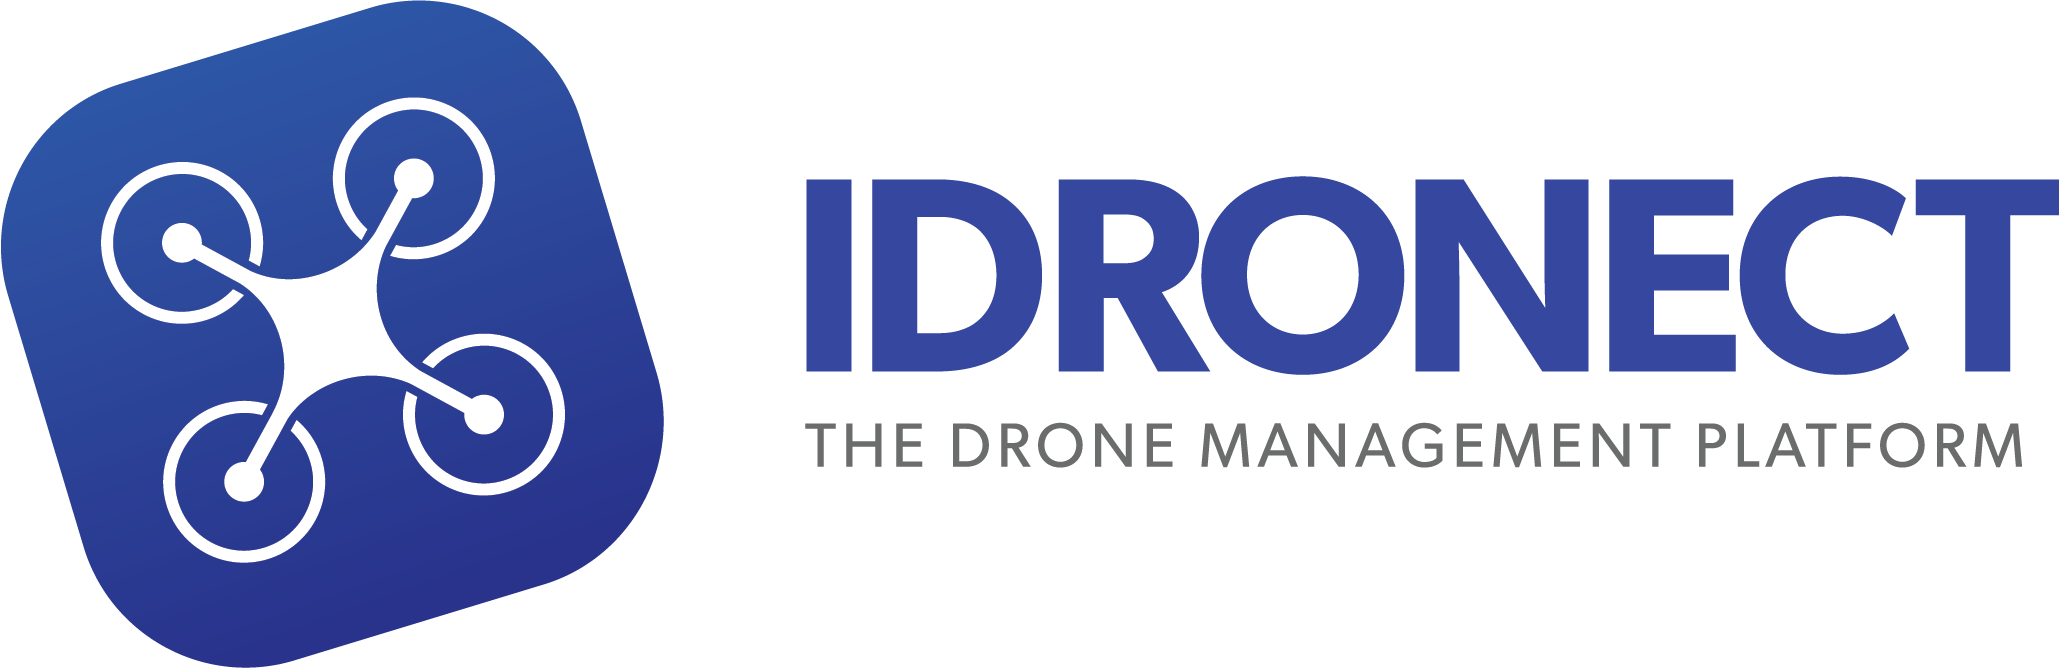 Blue Management Platform Logo - IDRONECT Drone Management Platform